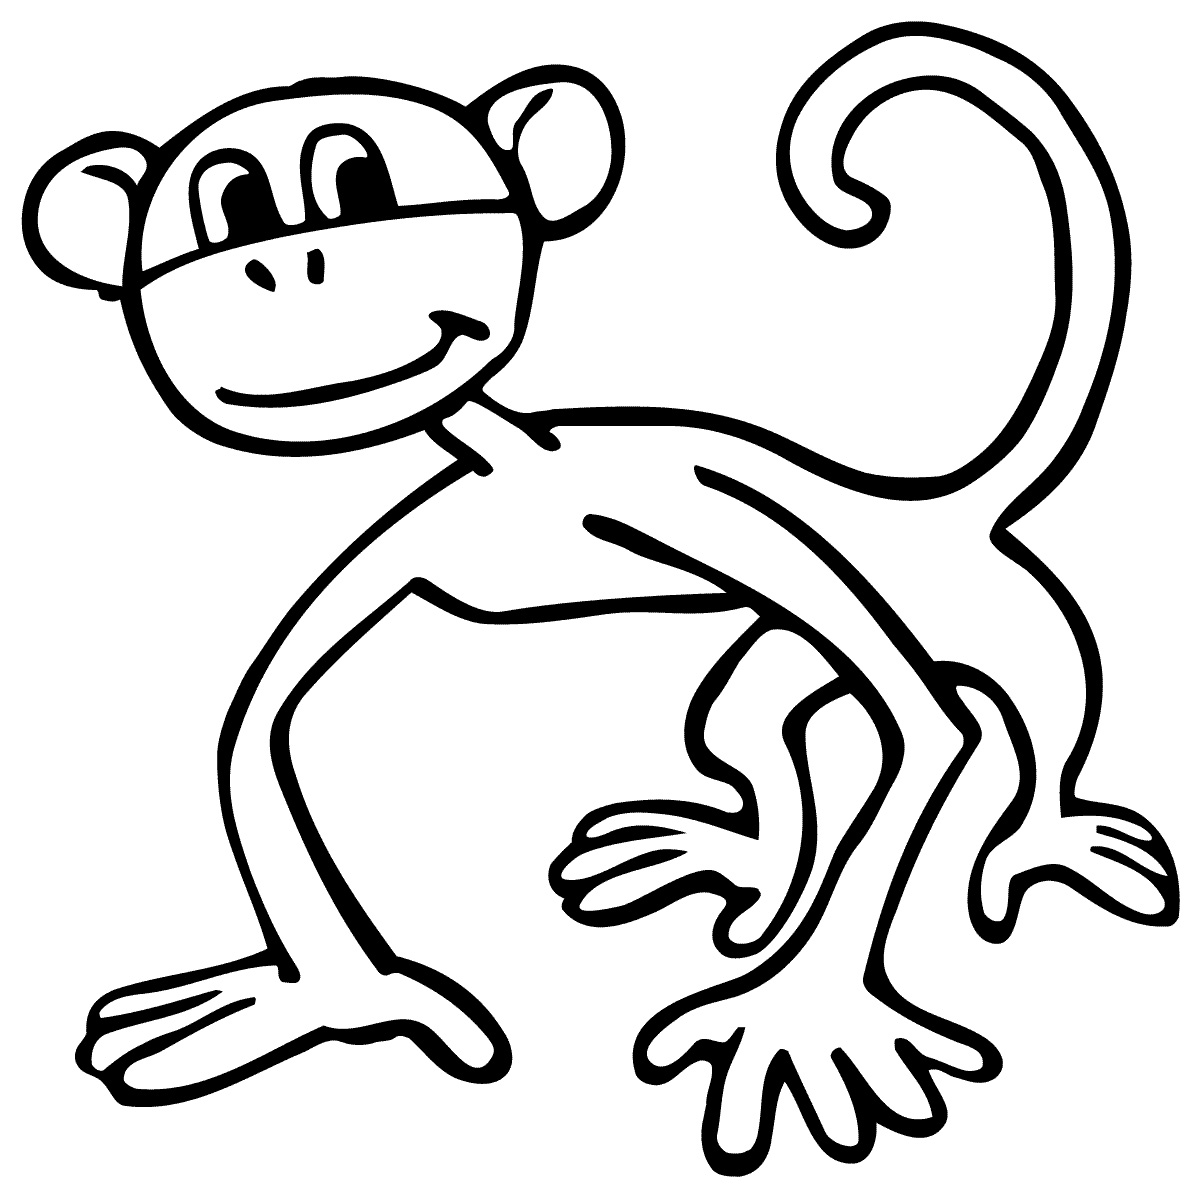 cute cartoon monkeys to draw